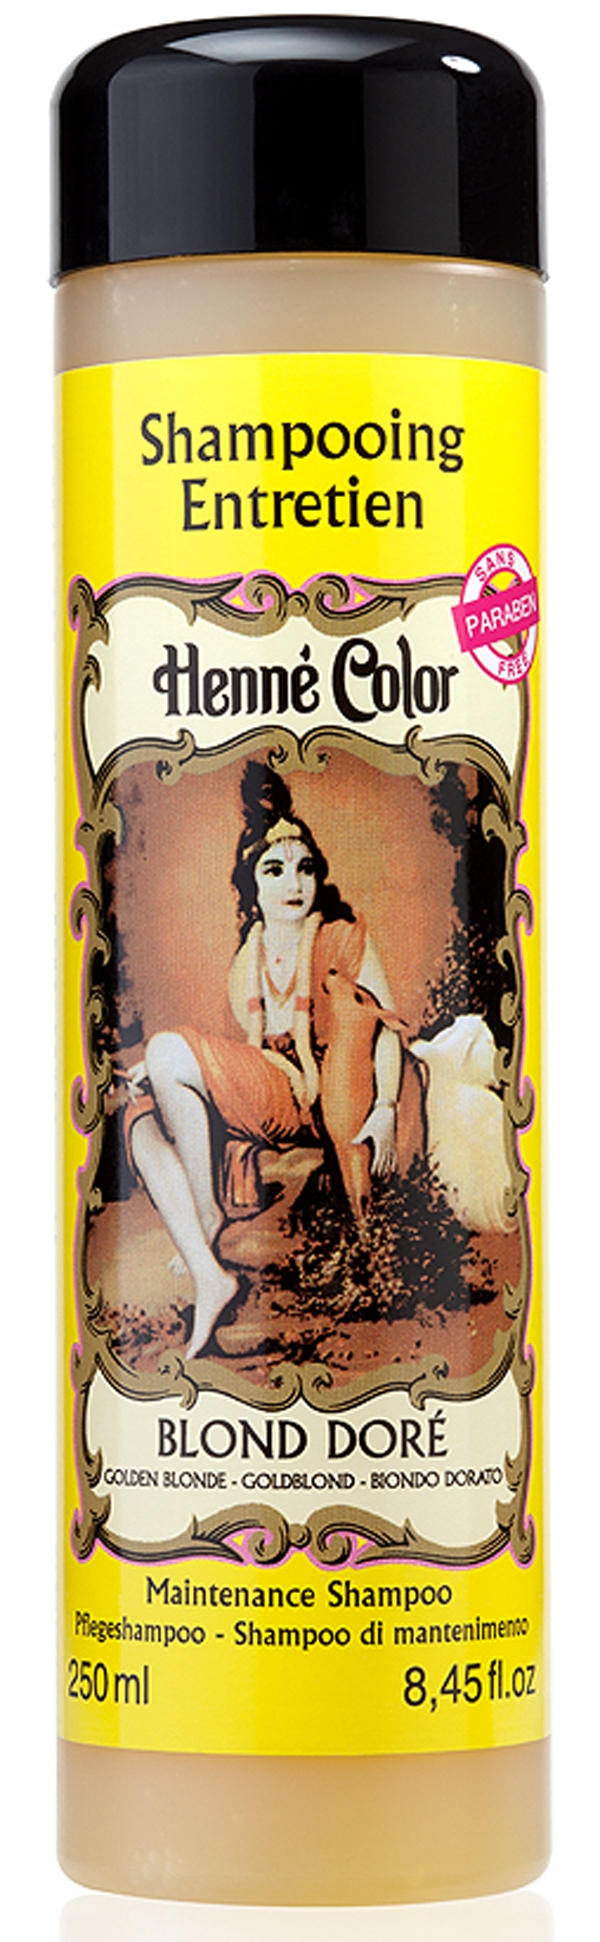 Henné Color Henna maintenance shampoo golden blonde 250ml